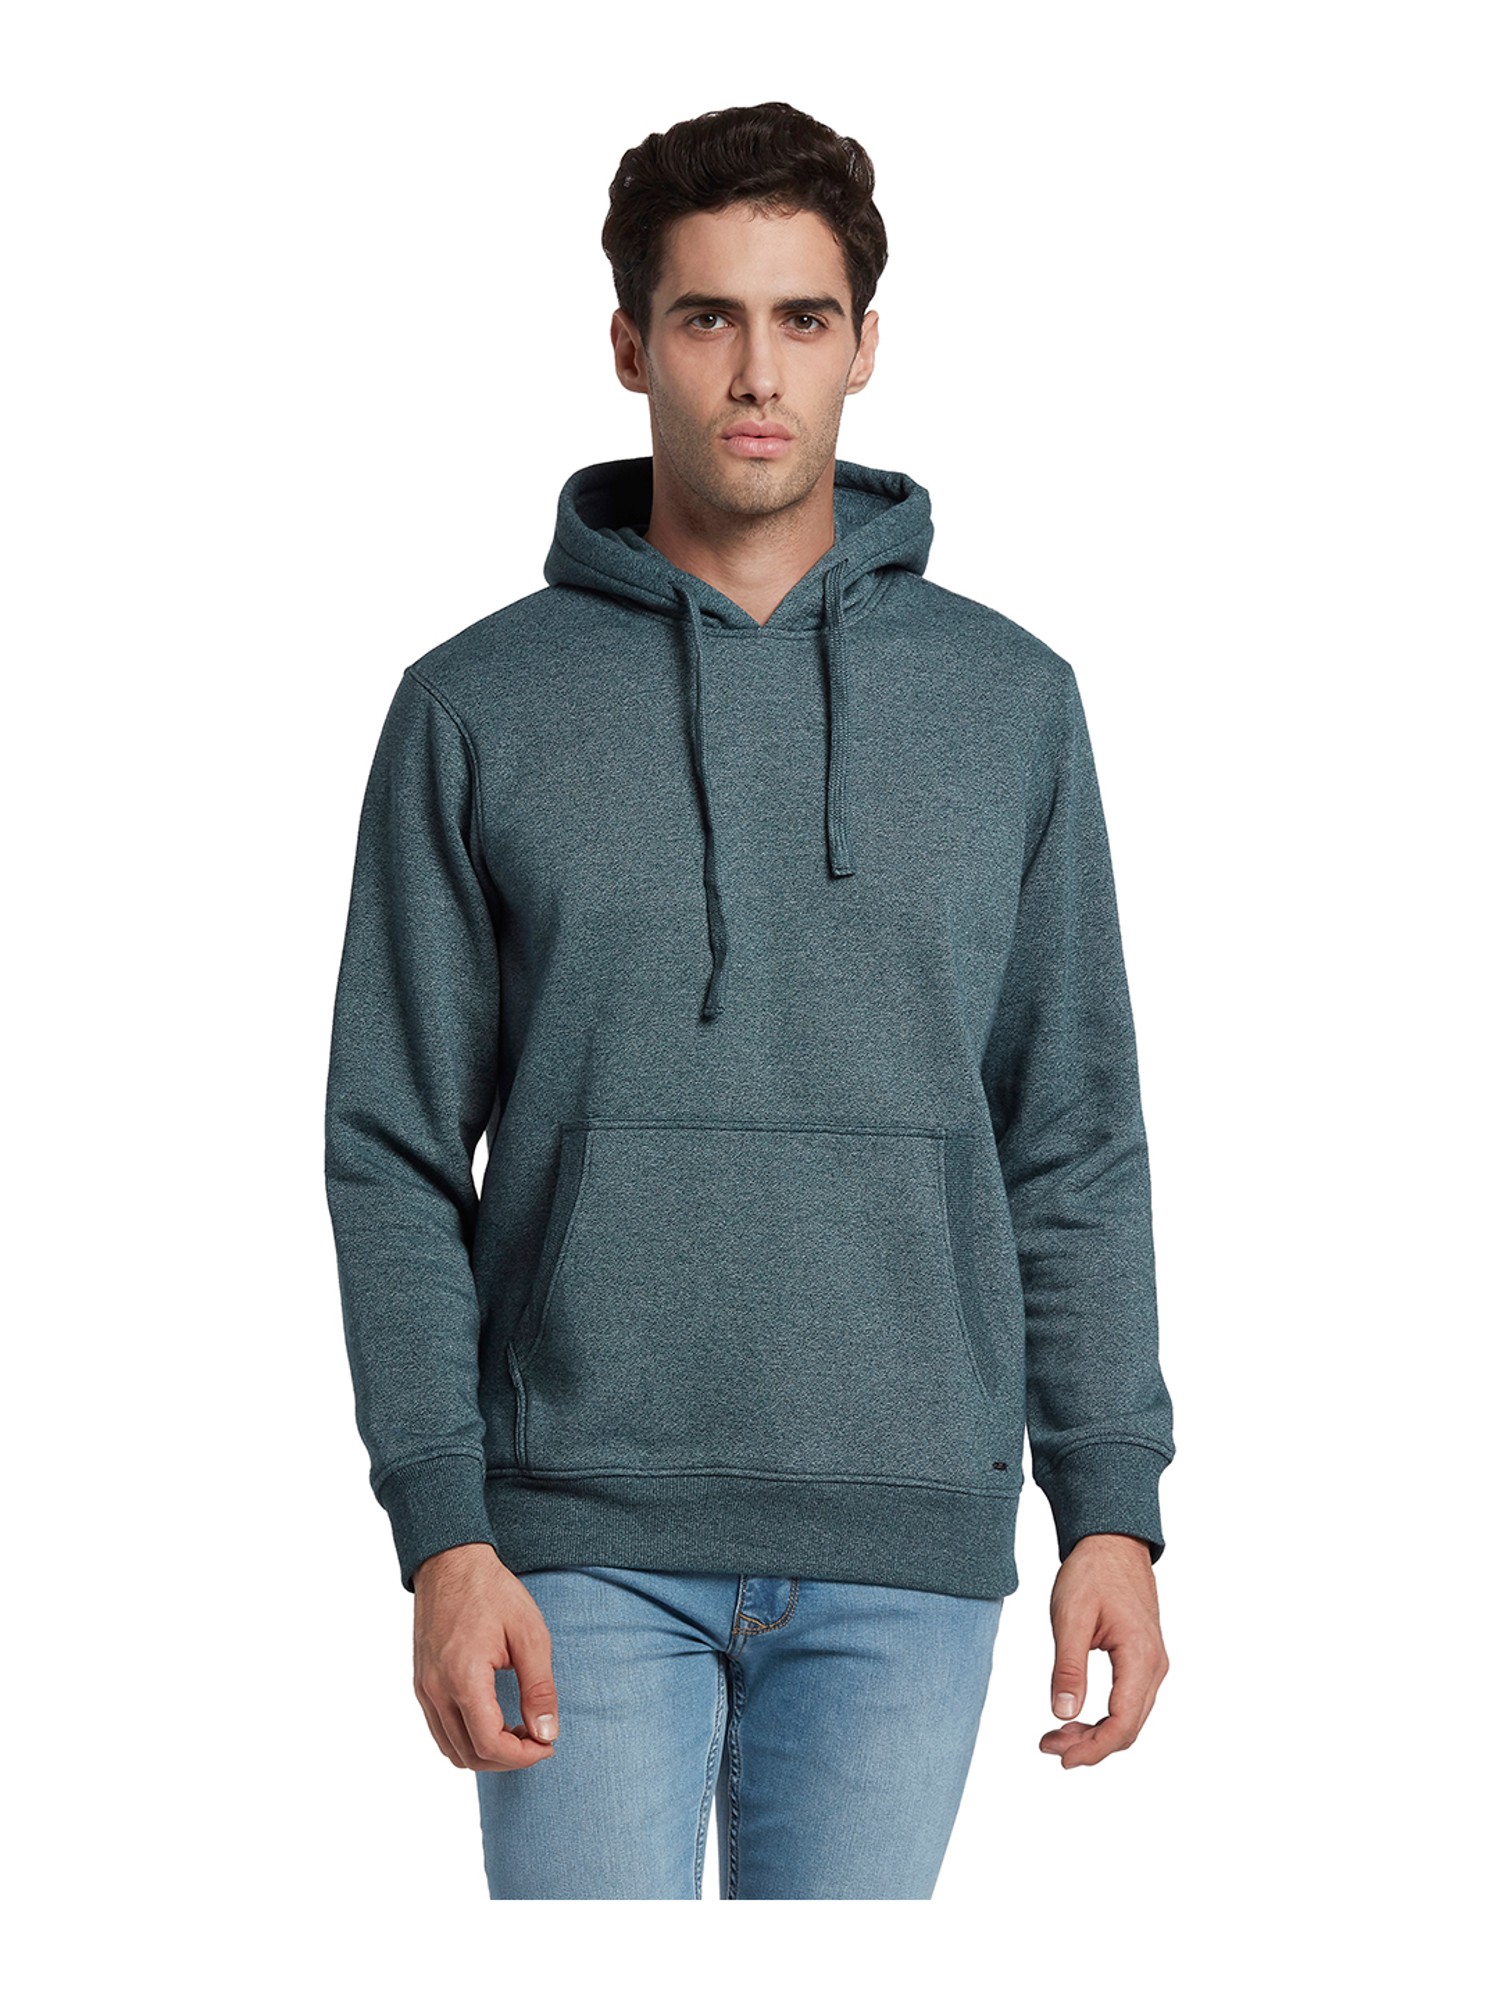 Buy Parx Indigo Hooded Sweatshirt for Men's Online @ Tata CLiQ